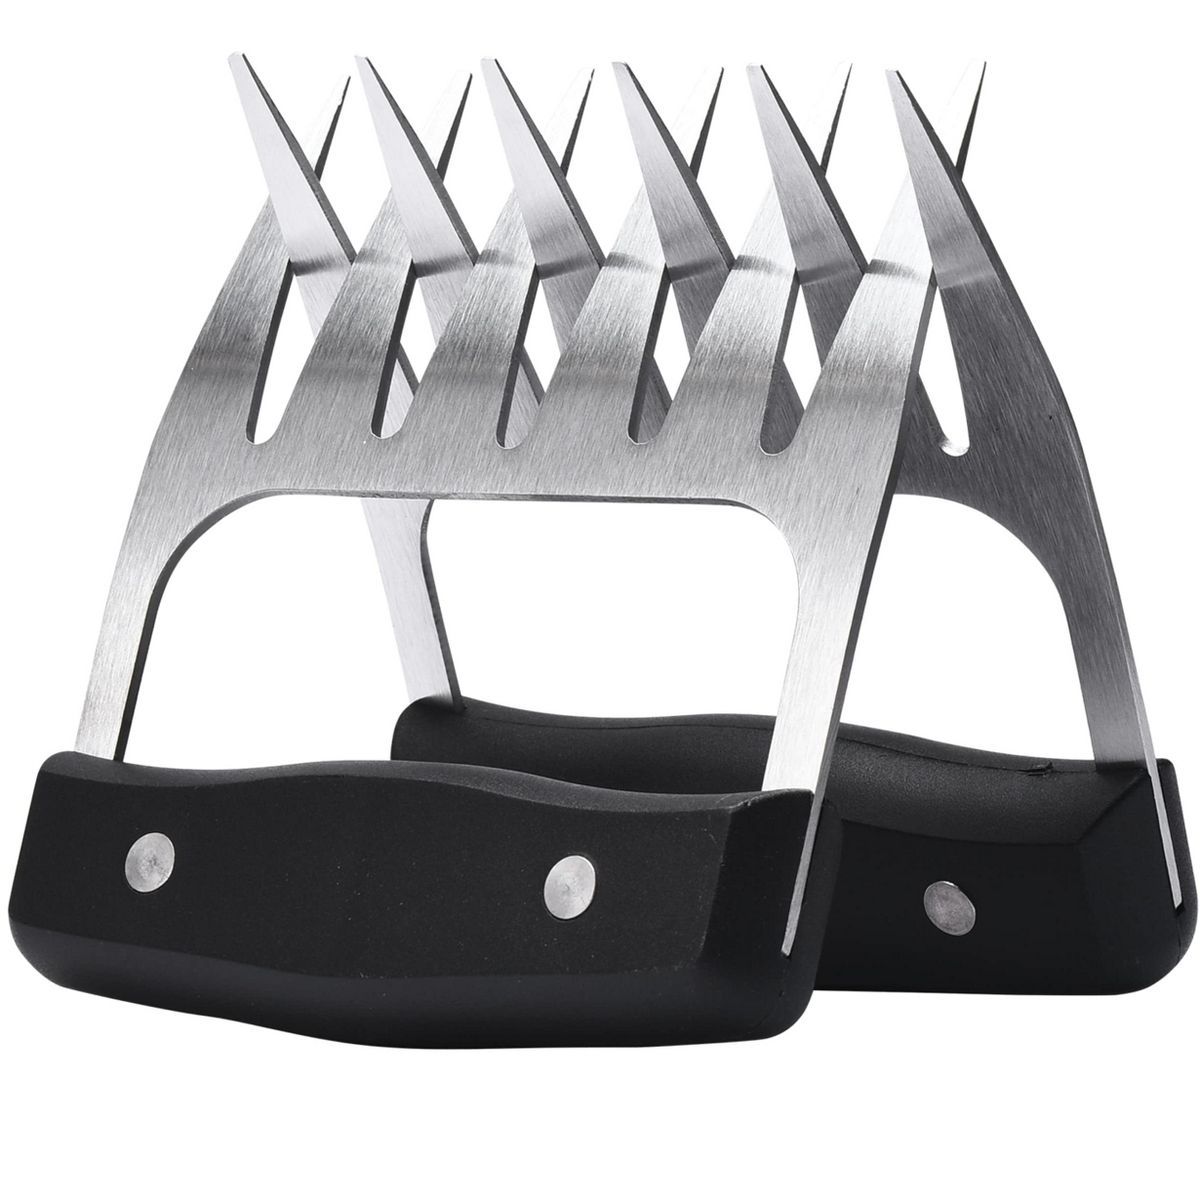 Grill Trade Metal Meat Claws Bear Shredder Puller Tool for Shredding Pulled Pork | Target